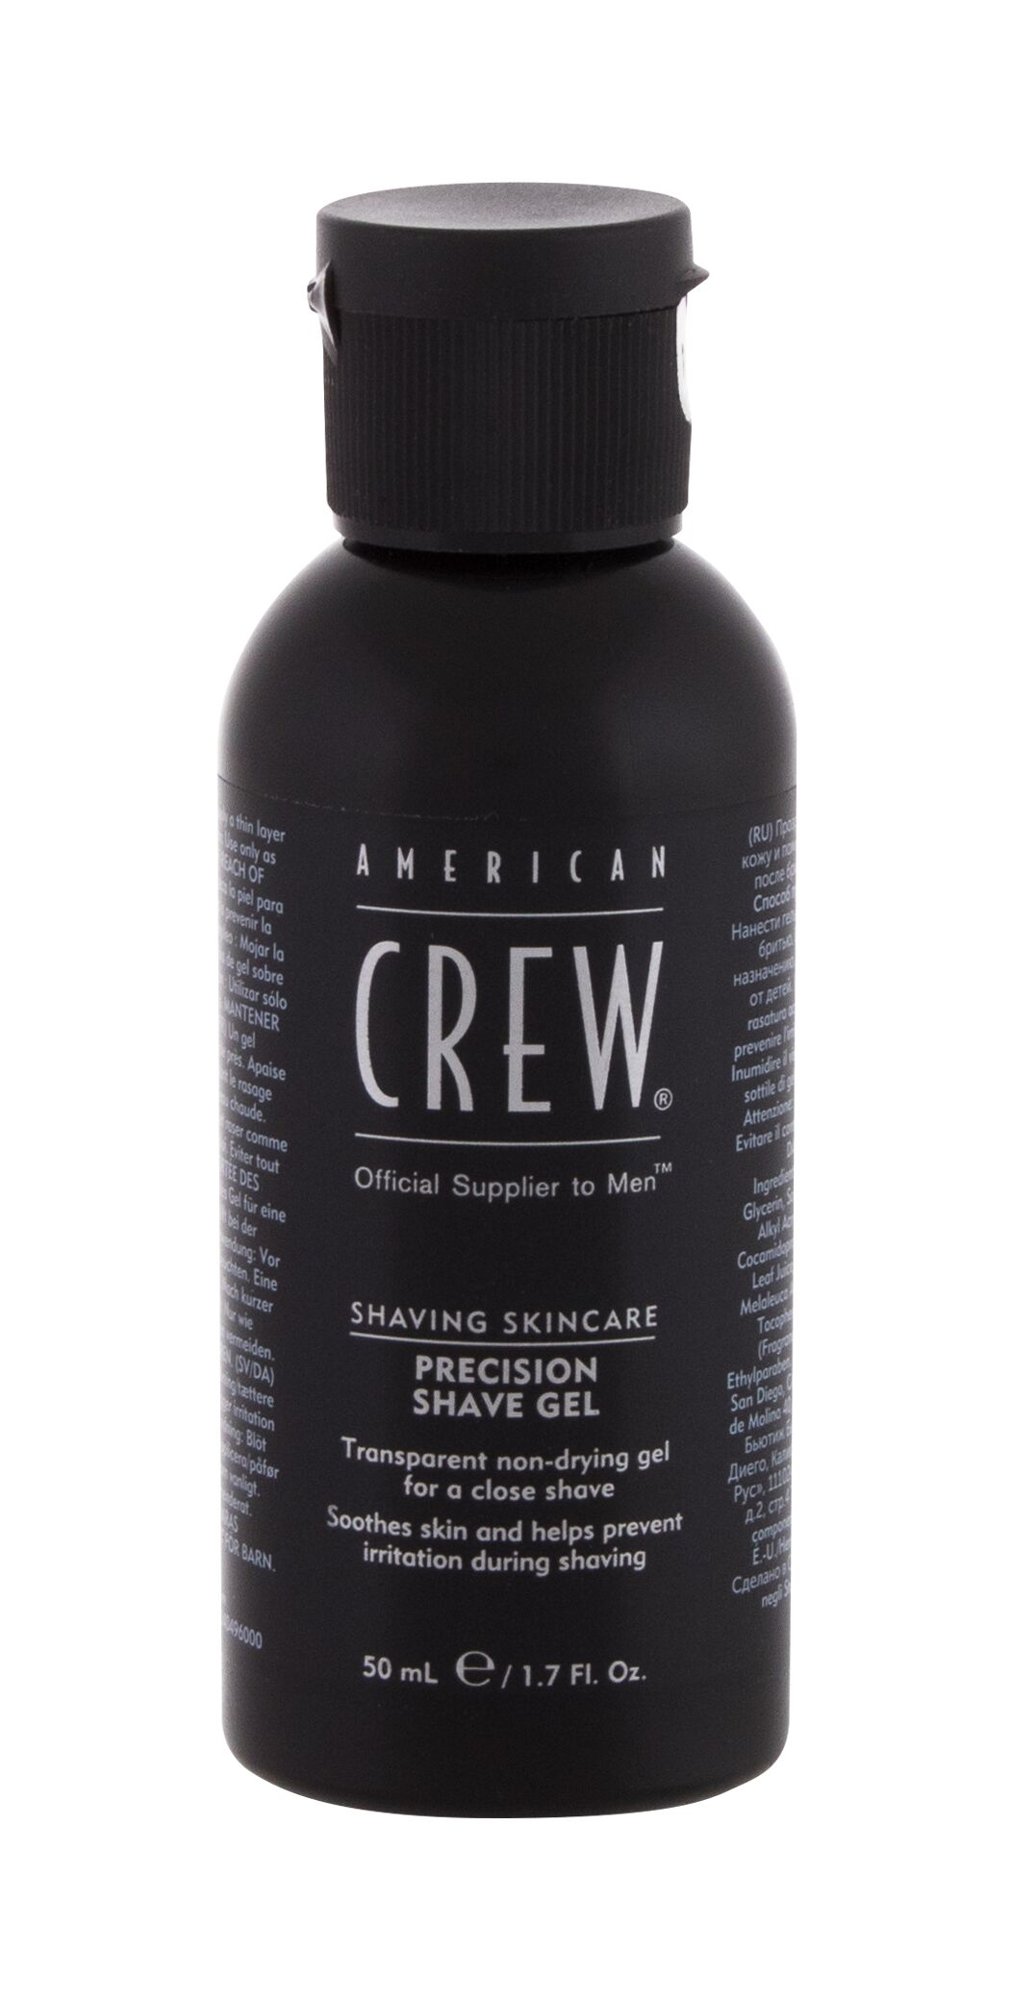 American Crew Shaving Skincare Precision Shave Gel 50ml skutimosi gelis